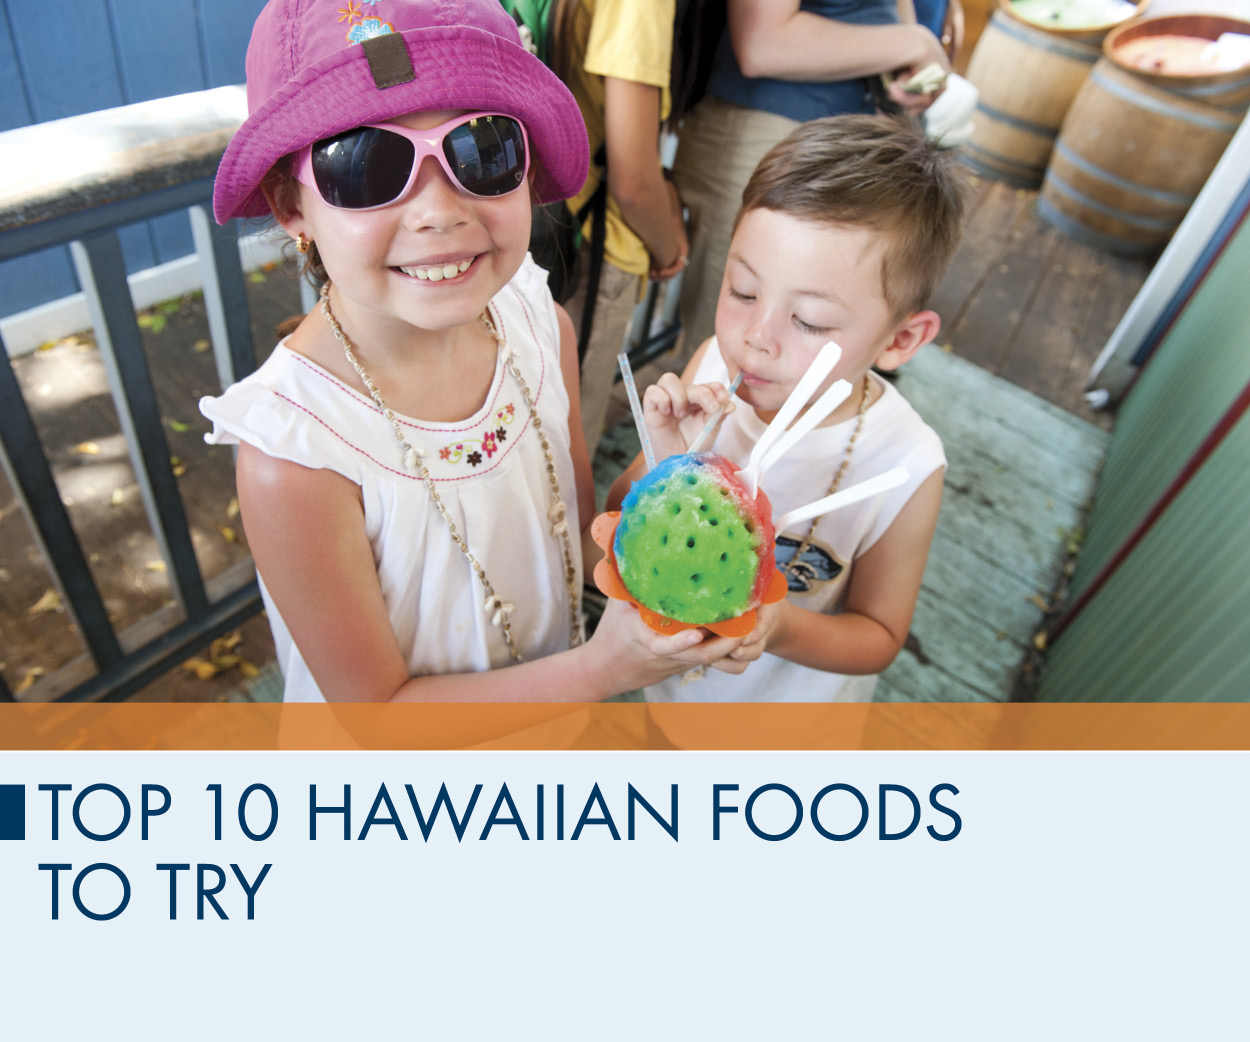 Top 10 Hawaiian Foods to Try